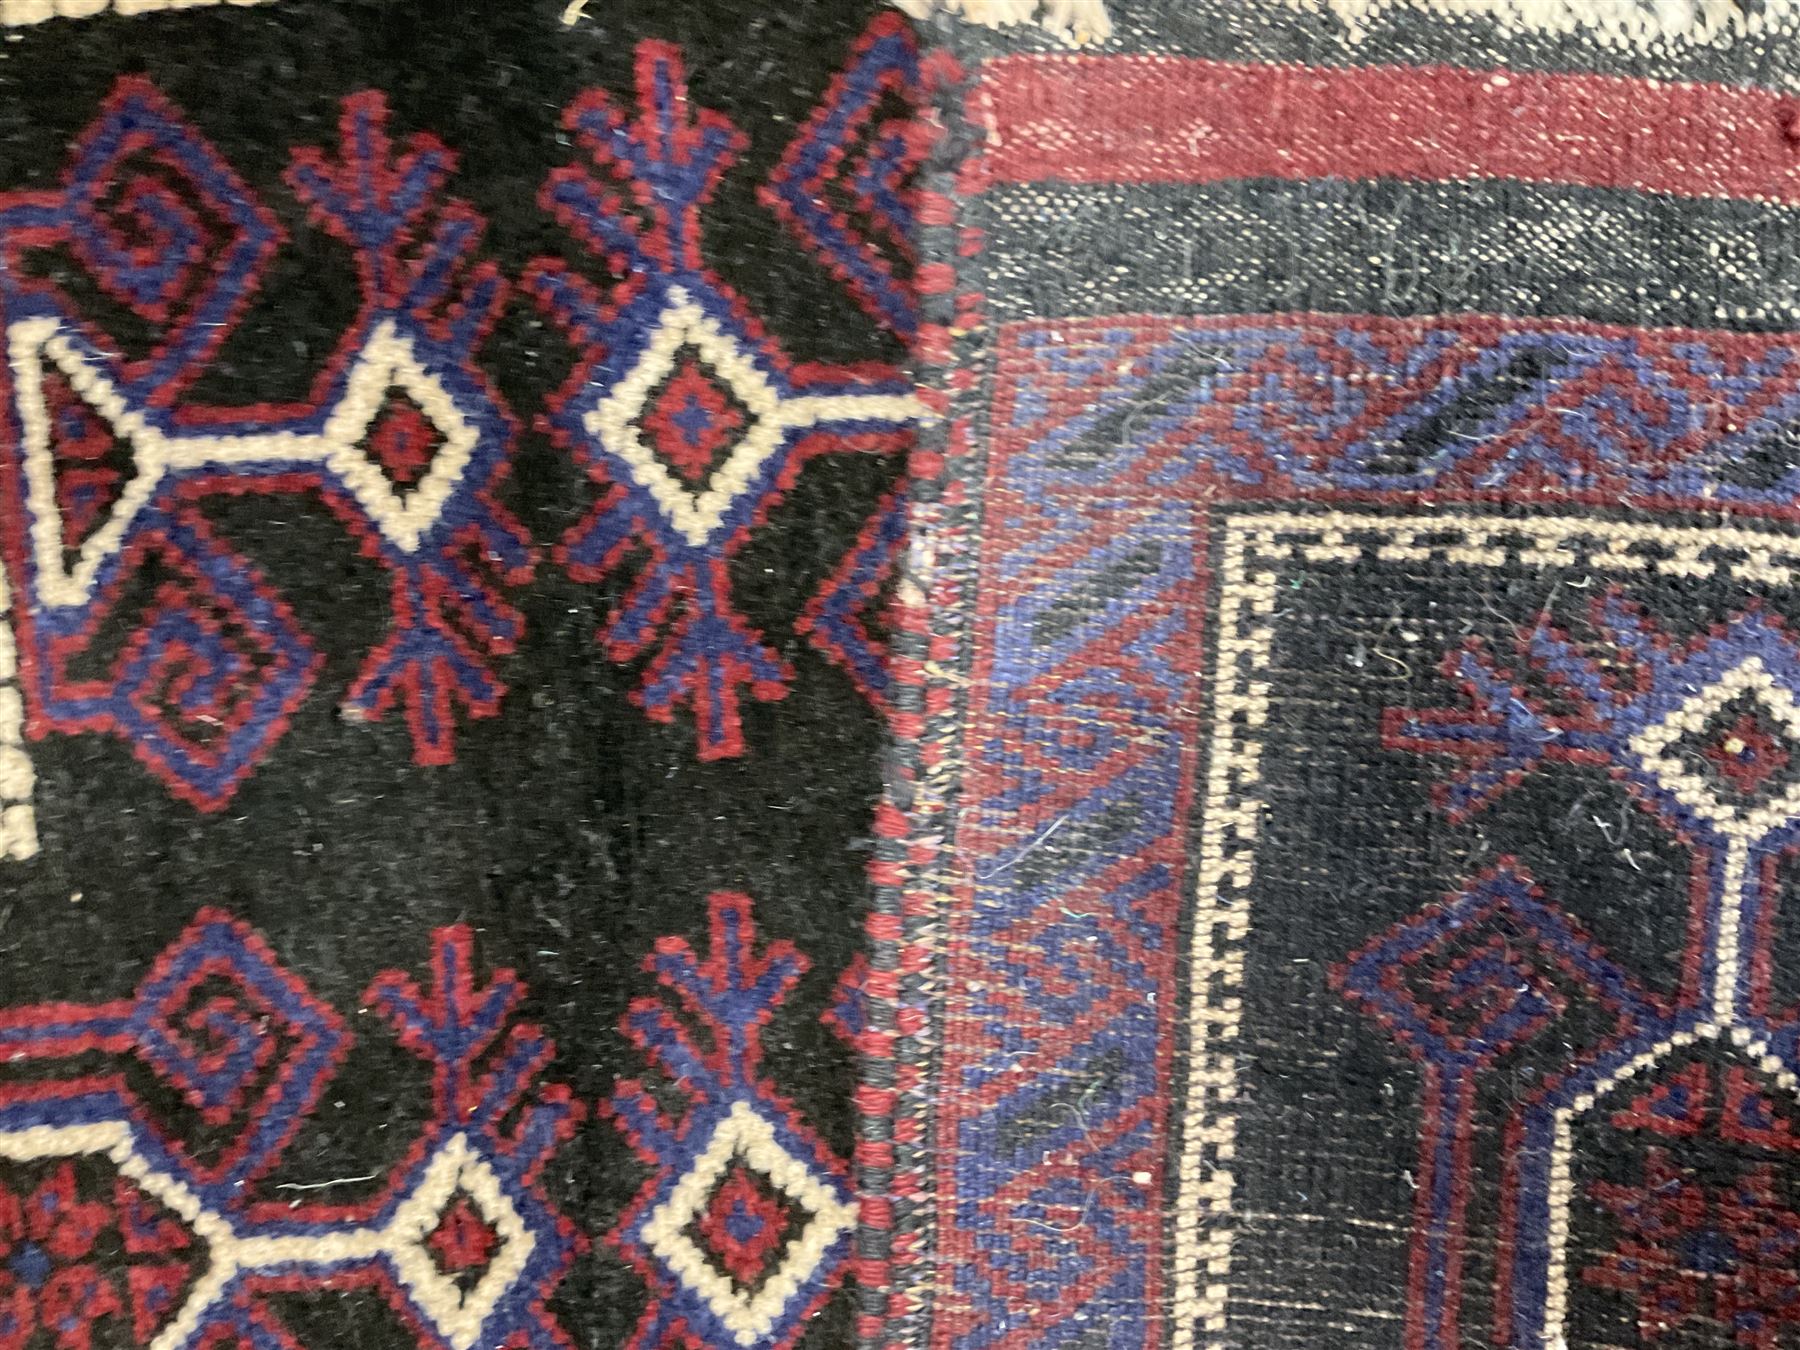 Persian Tree of Life design rug (140cm x 82cm) - Image 3 of 4